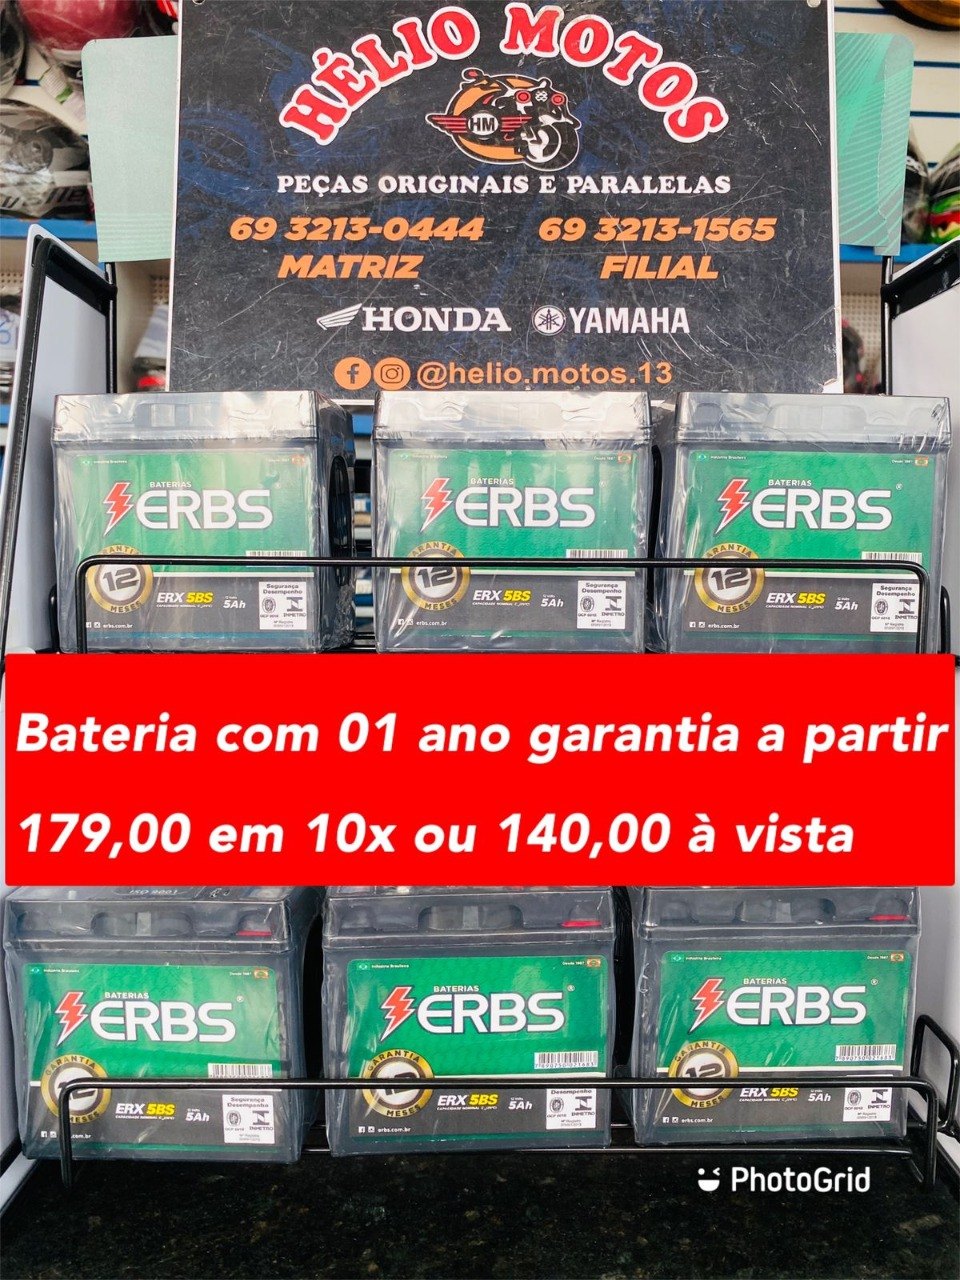 Confira as promoções exclusivas Hélio Motos